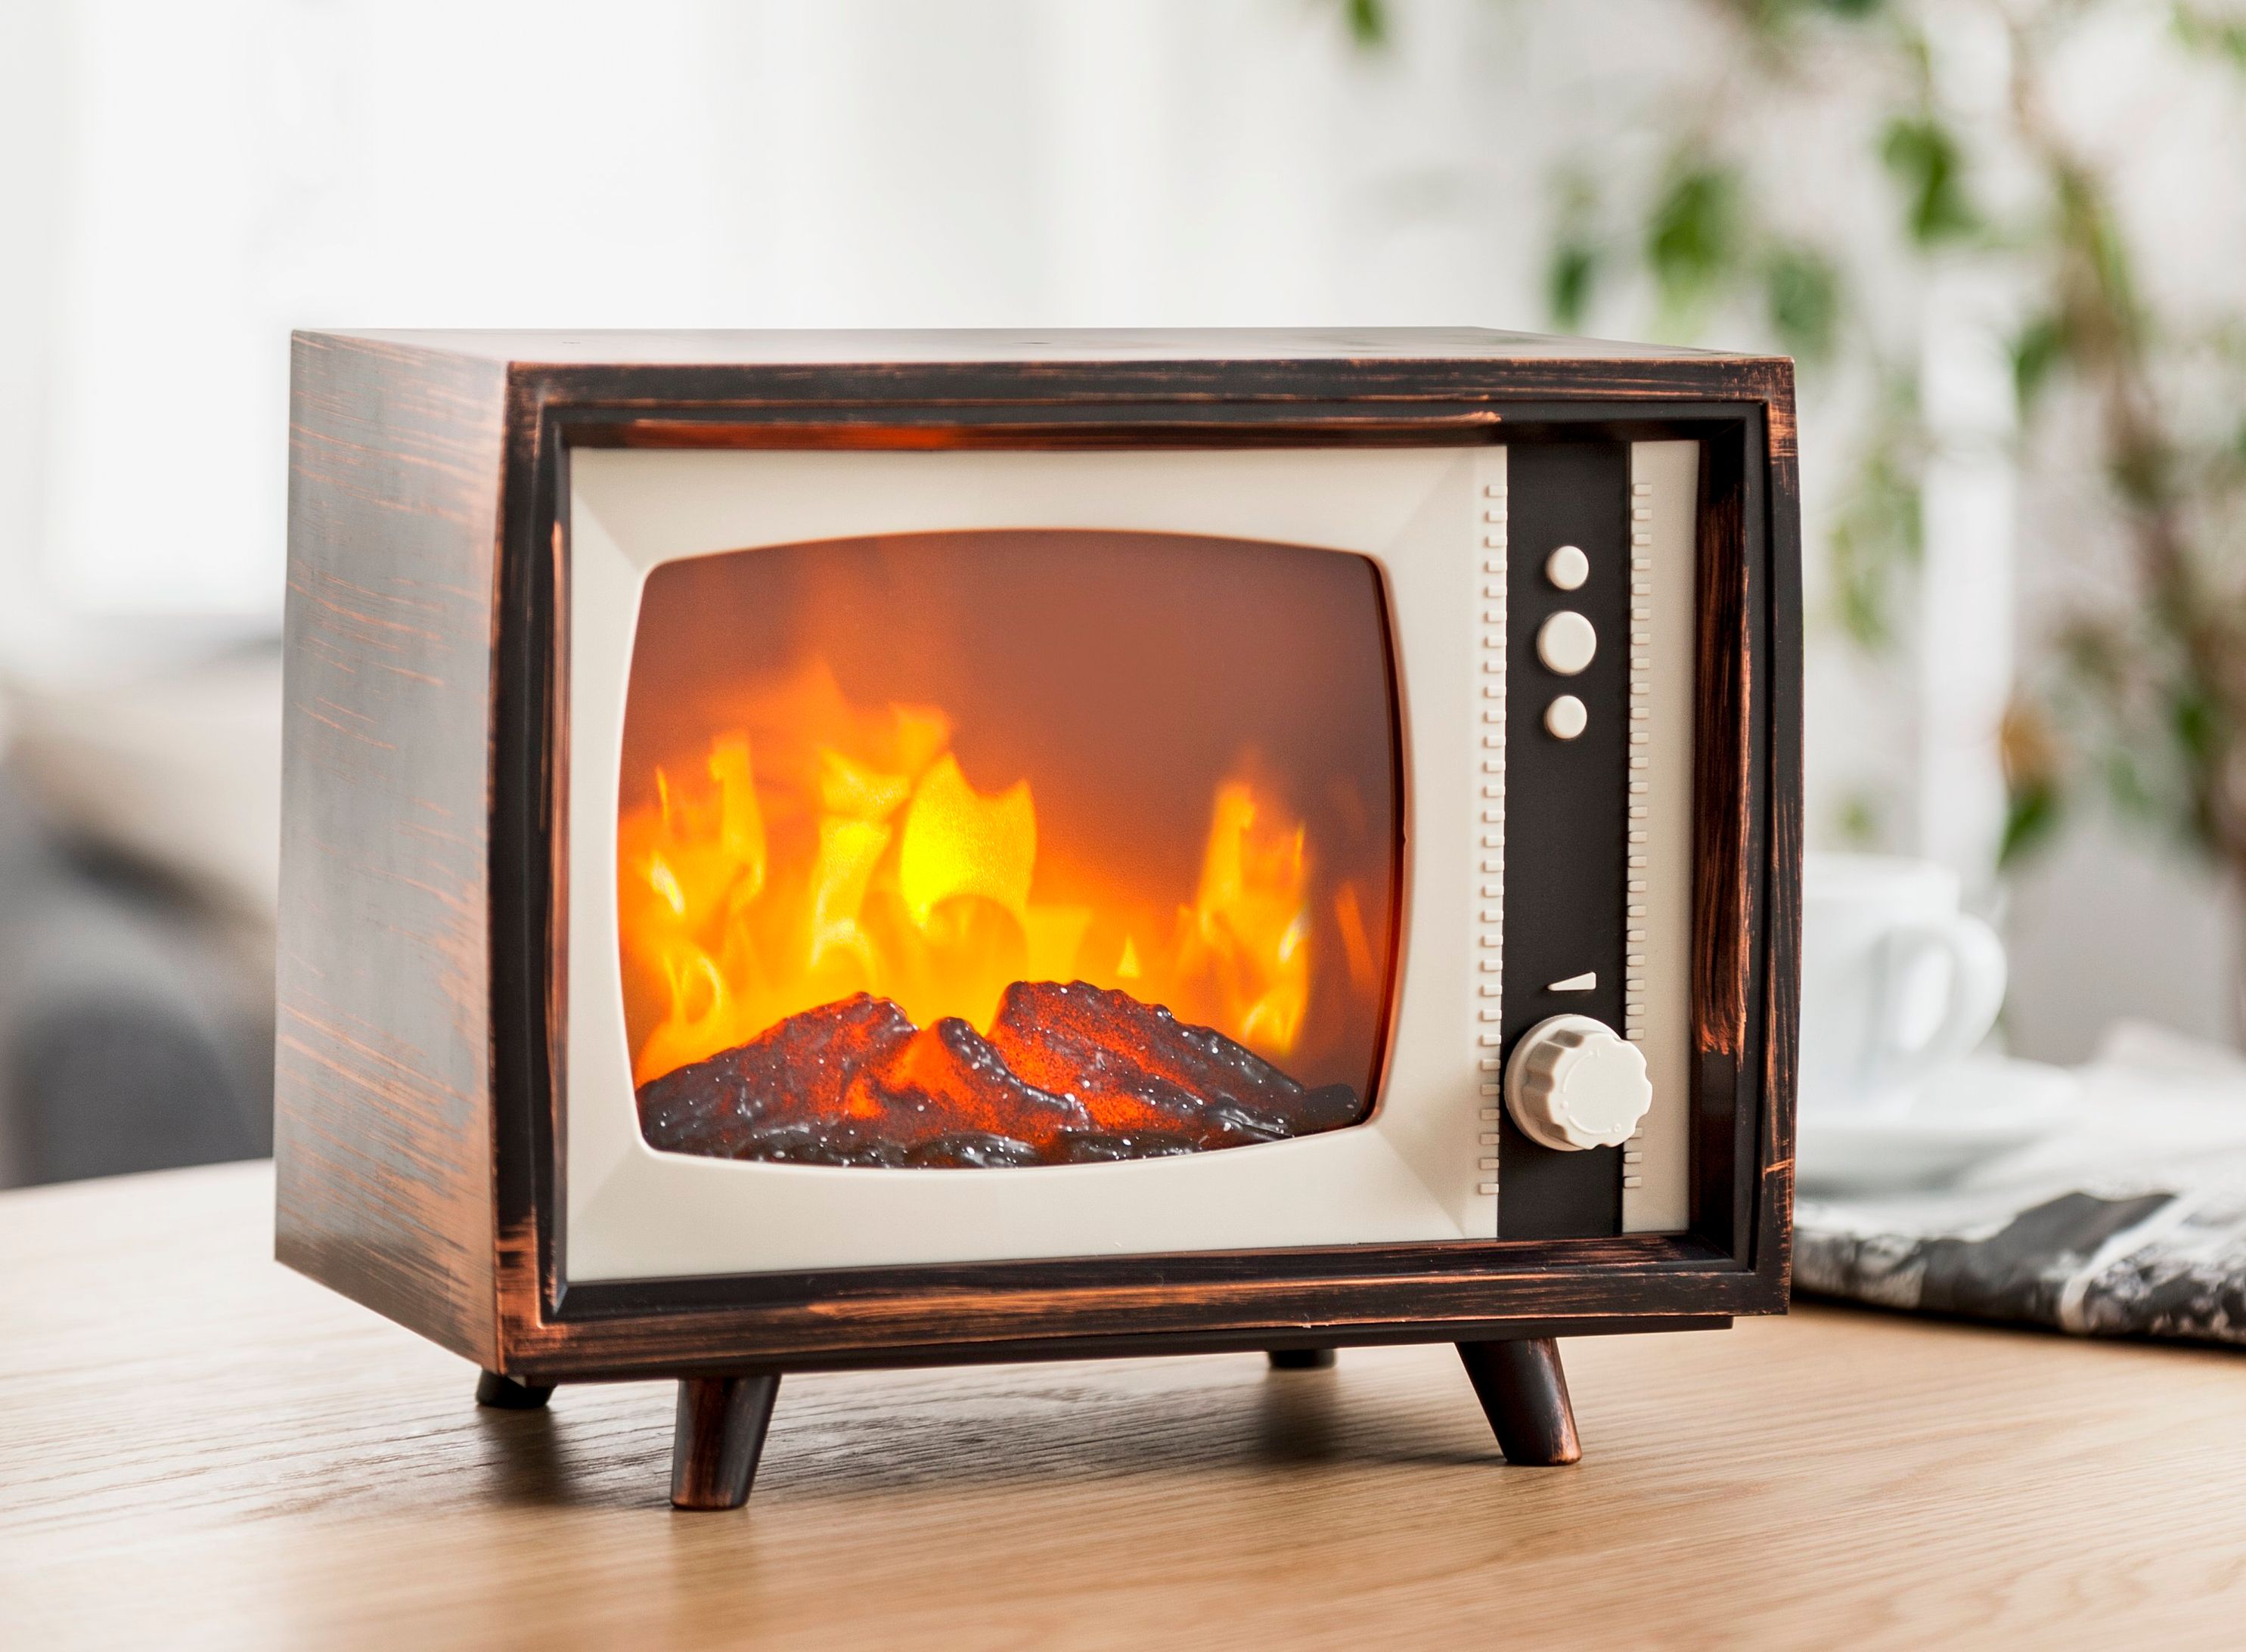 LED-Minikamin Vintage TV mit Flammeneffekt | Weltbild.de